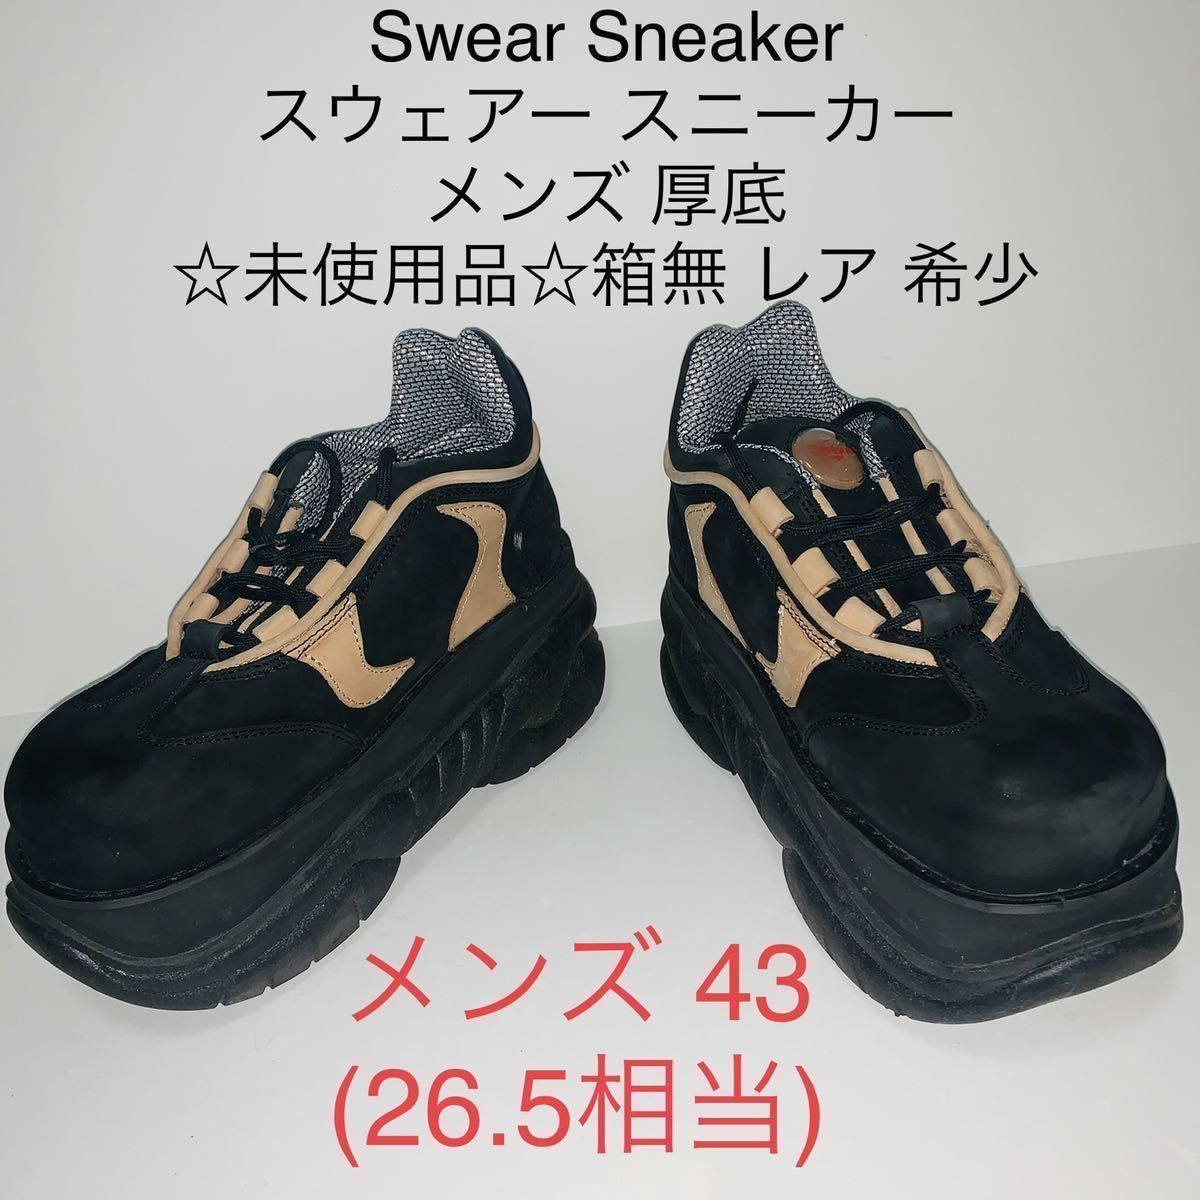 Swear Sneaker スウェアー スニーカー メンズ 厚底 ☆未使用品☆箱無 レア 希少